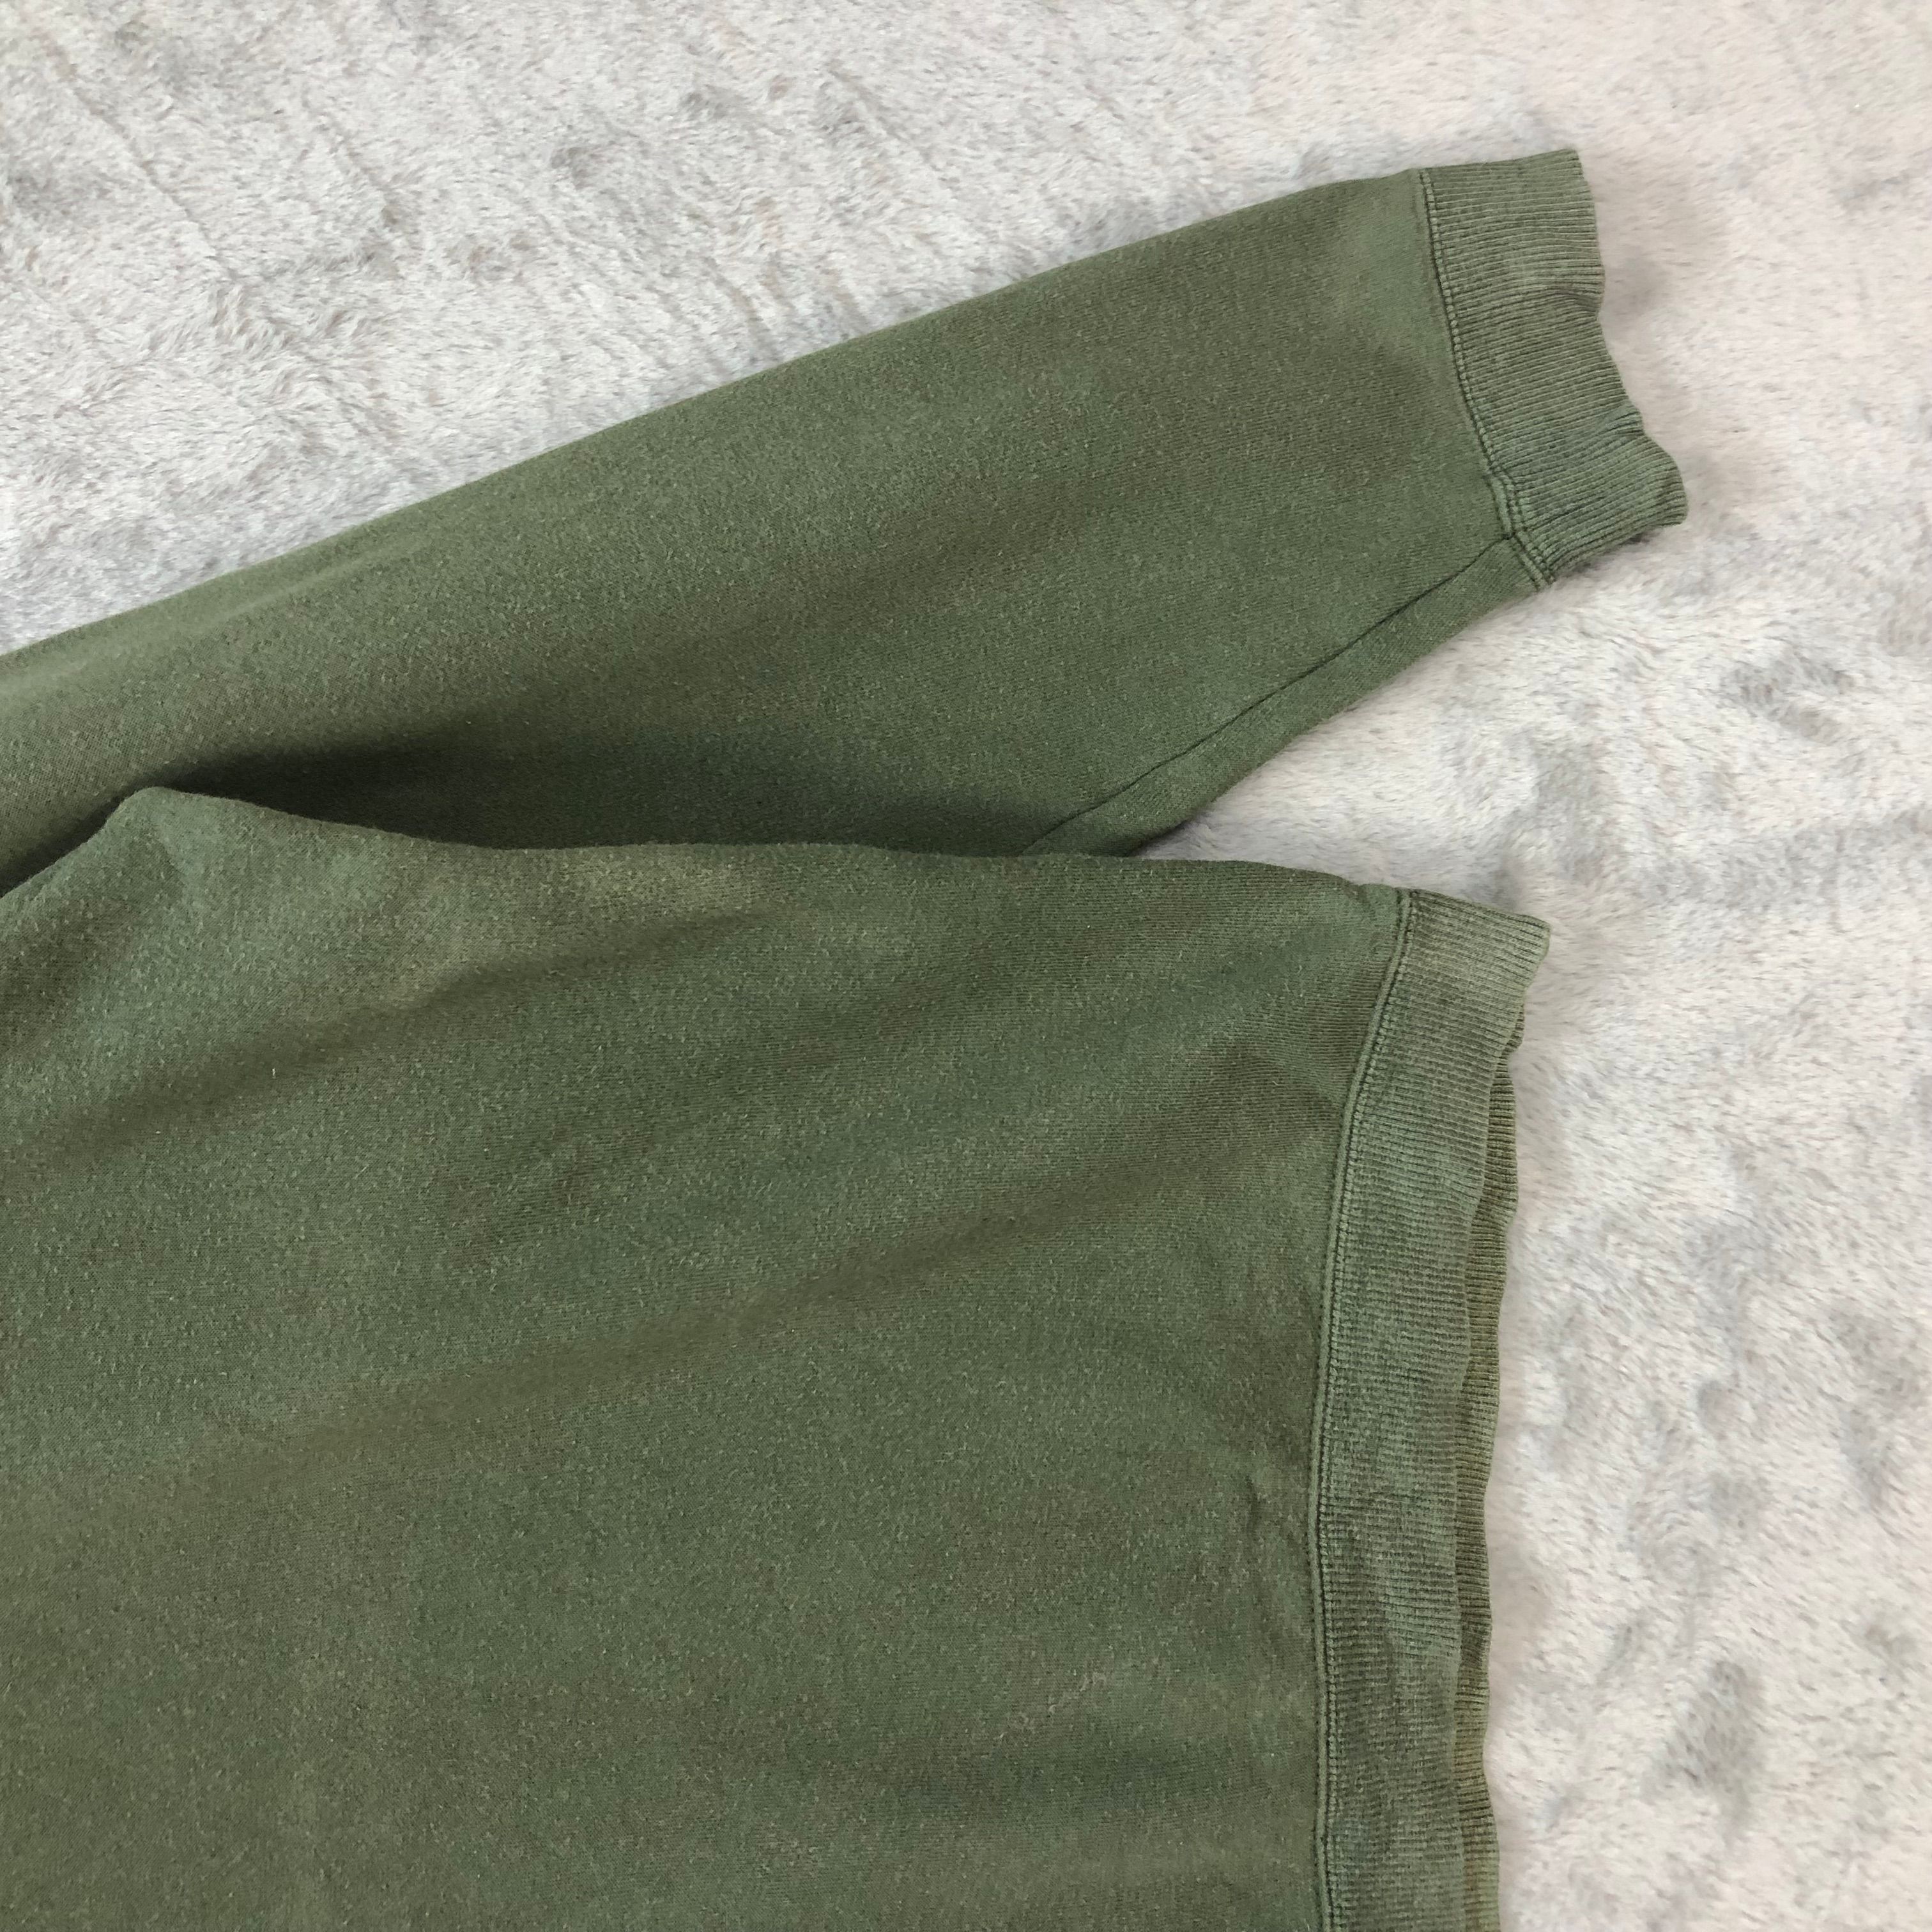 TNF Army Green Sweatshirts #6441-67 - 6